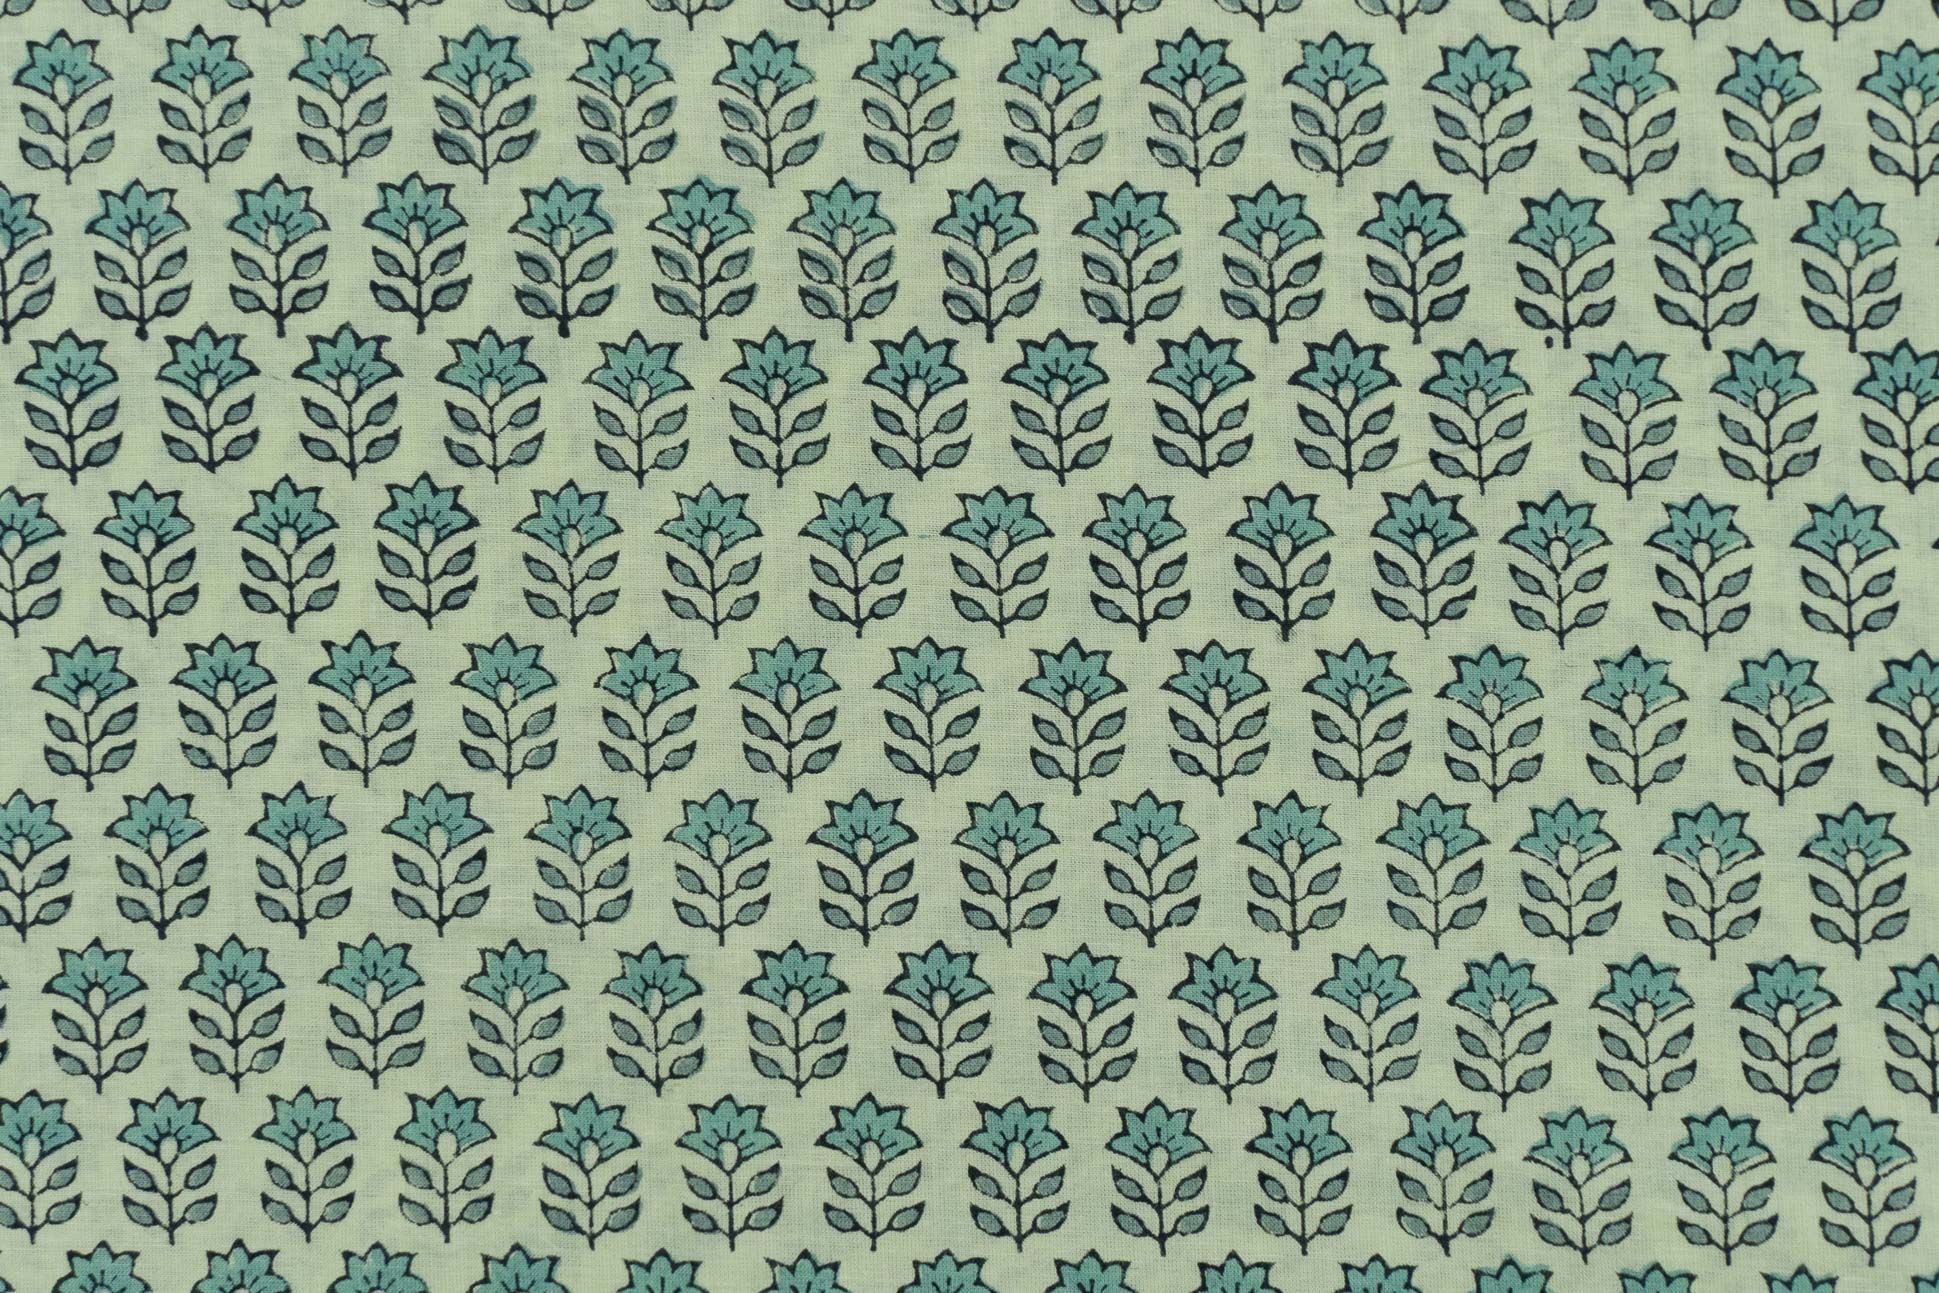 Pistachio Green Floral Block Printed Fabric